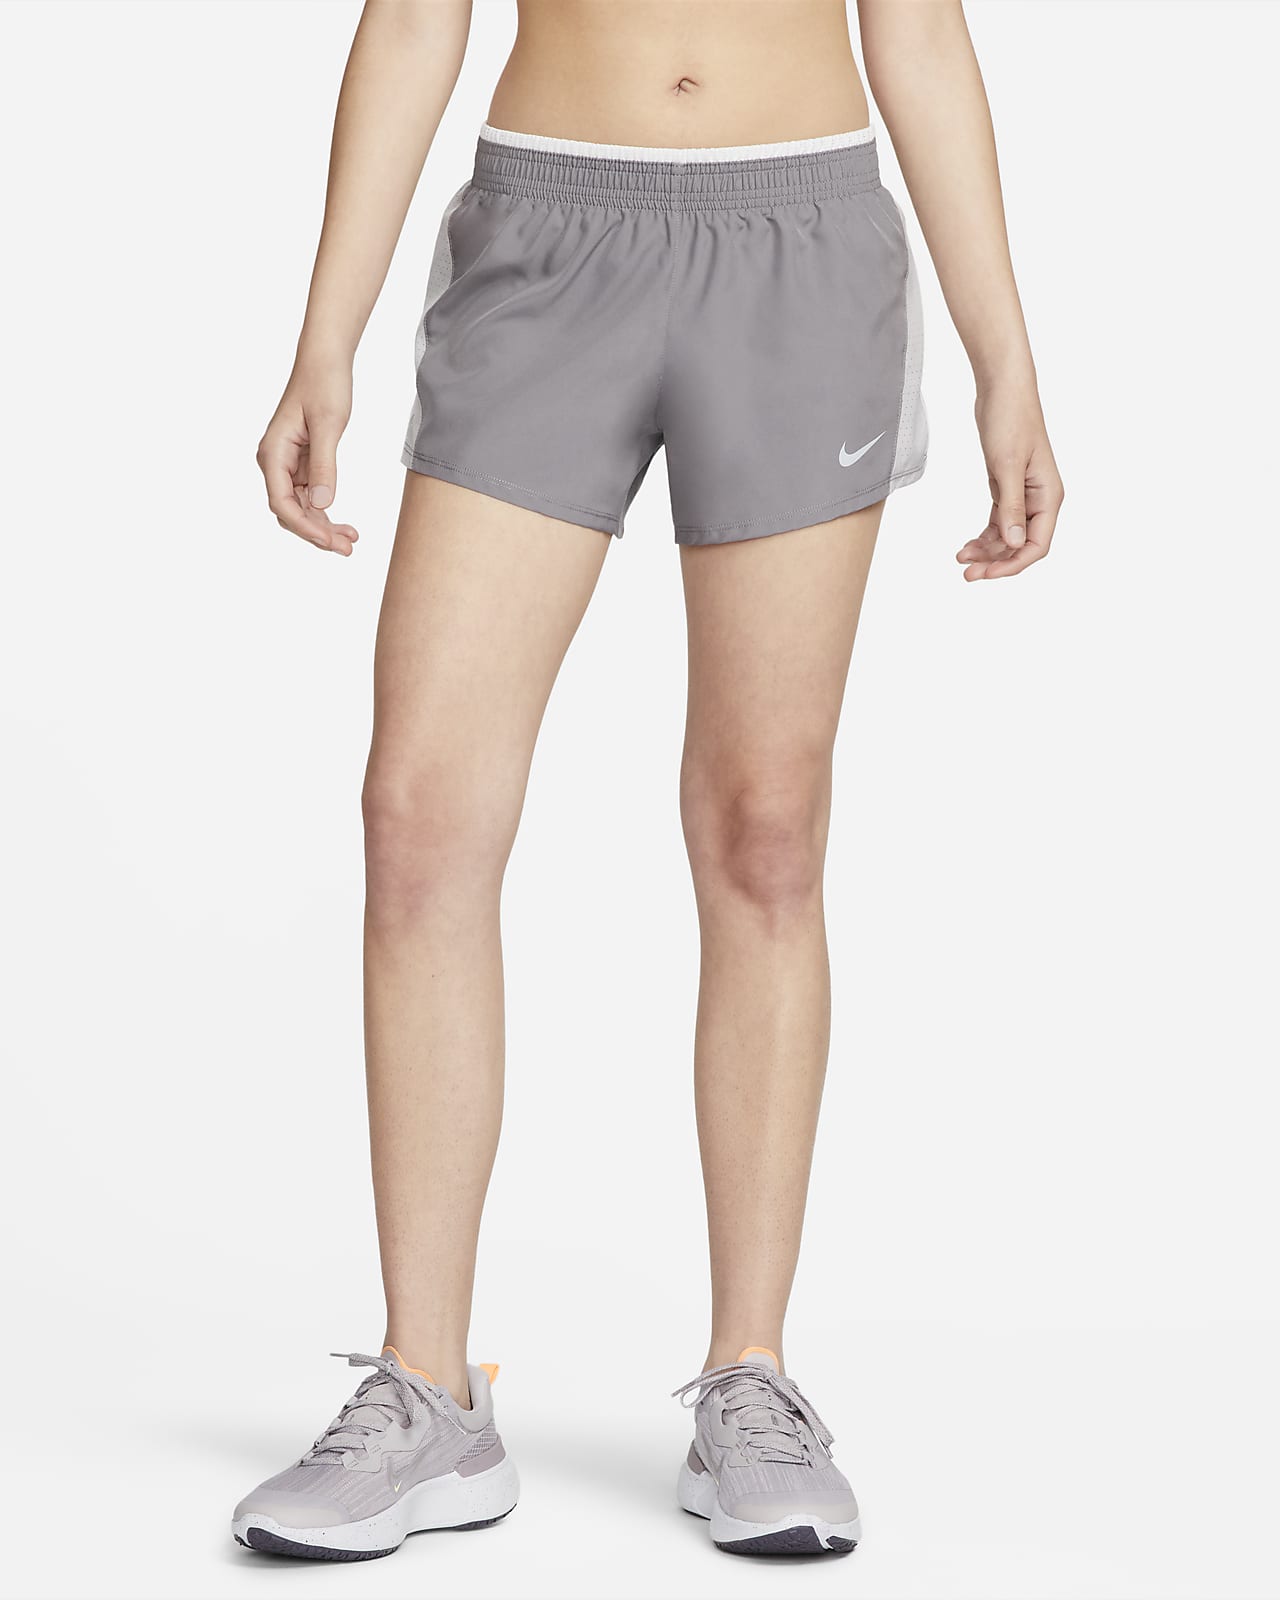 nike women's 10k running shorts